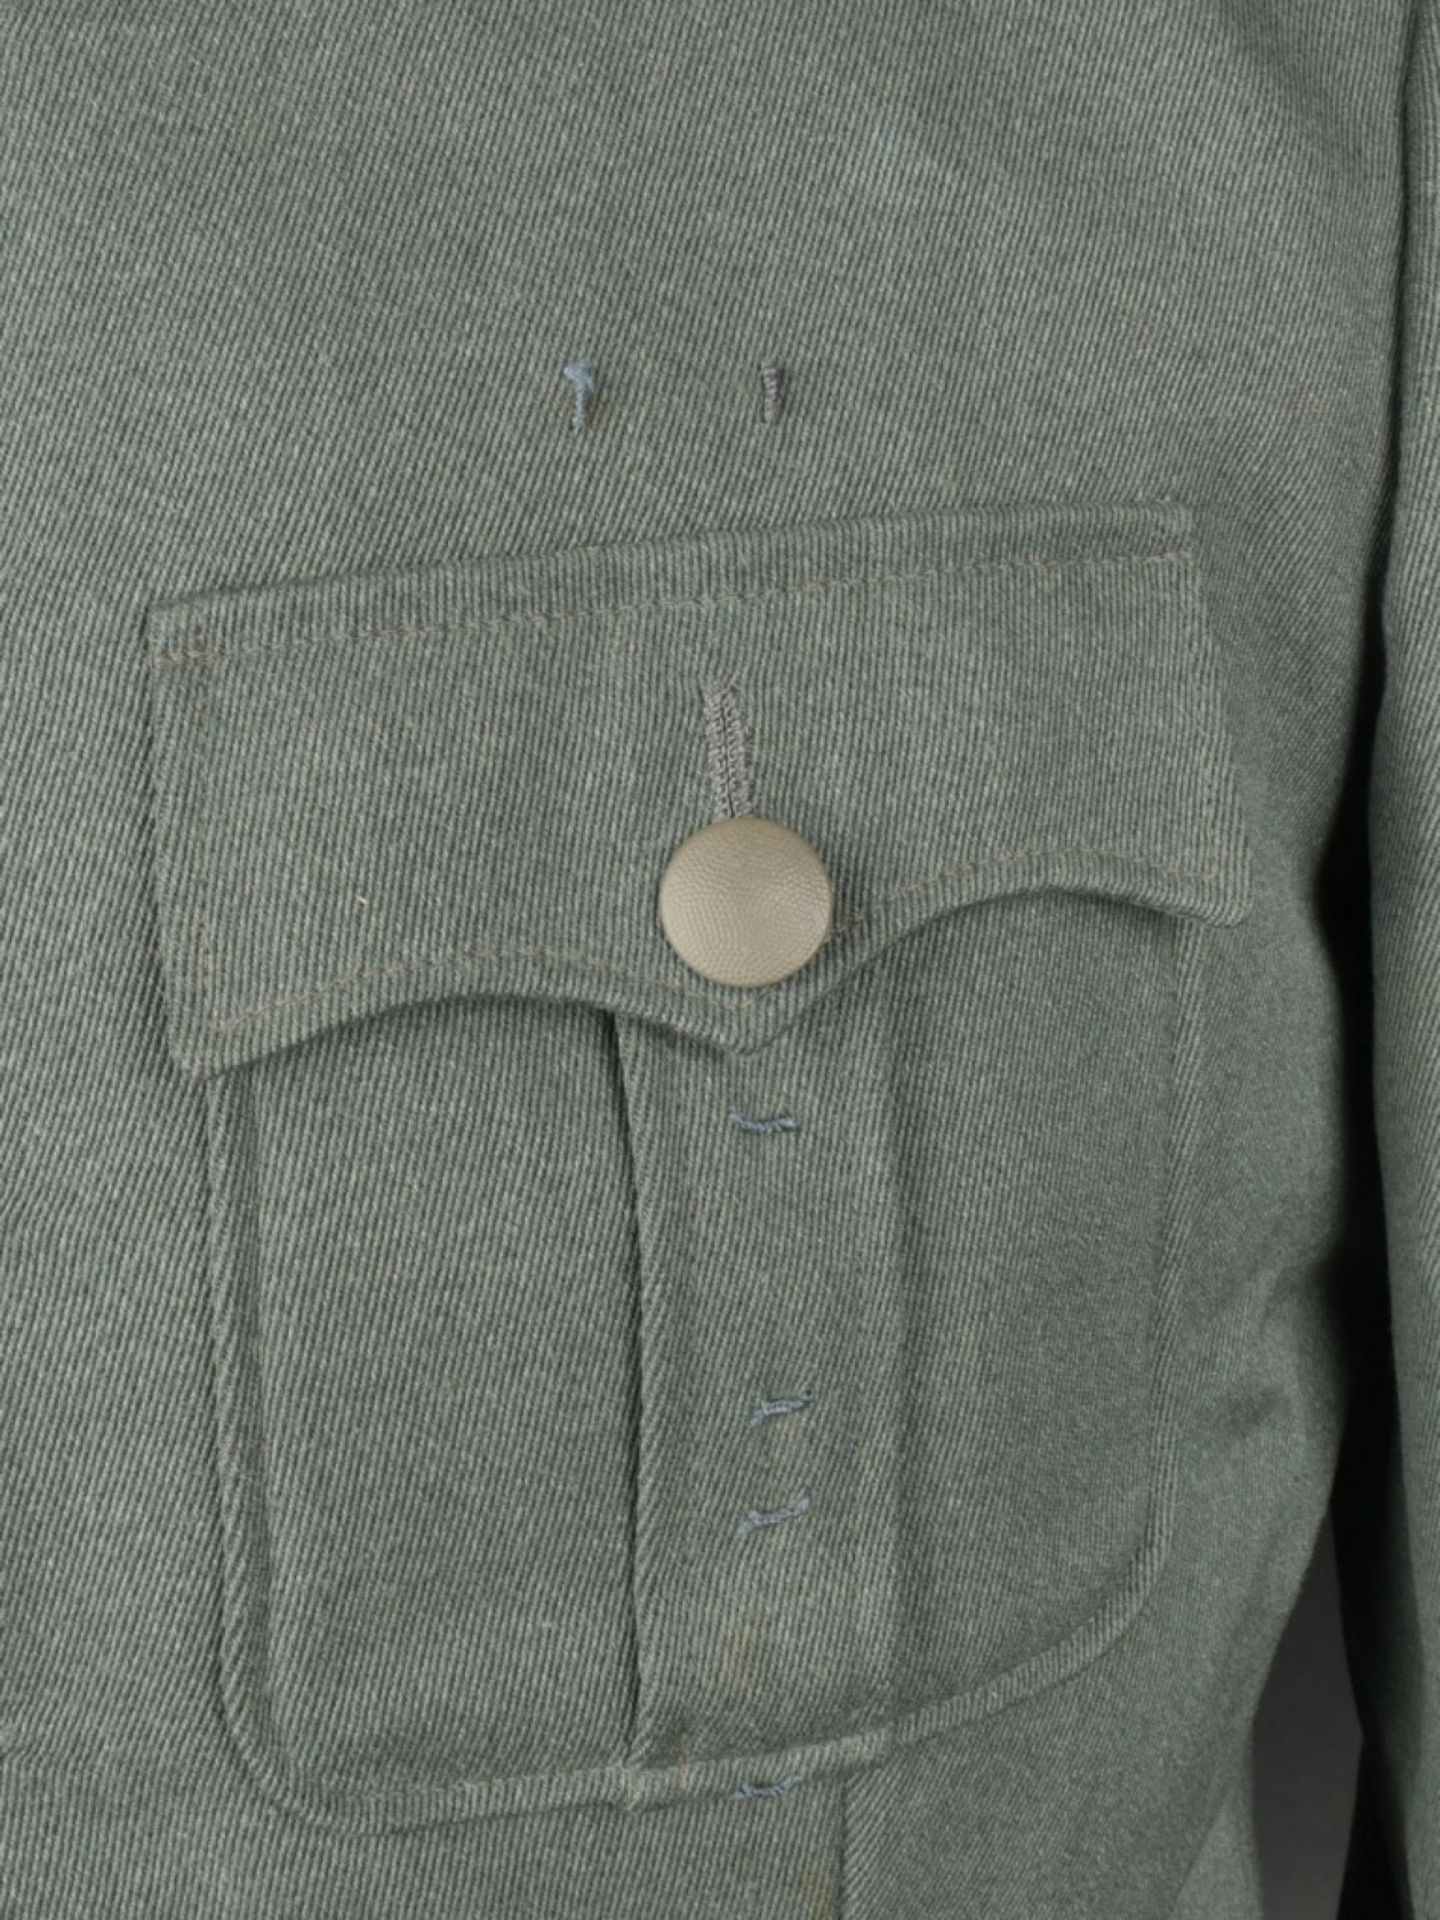 Vareuse officier Heer. Heer officer jacket.  - Image 2 of 10